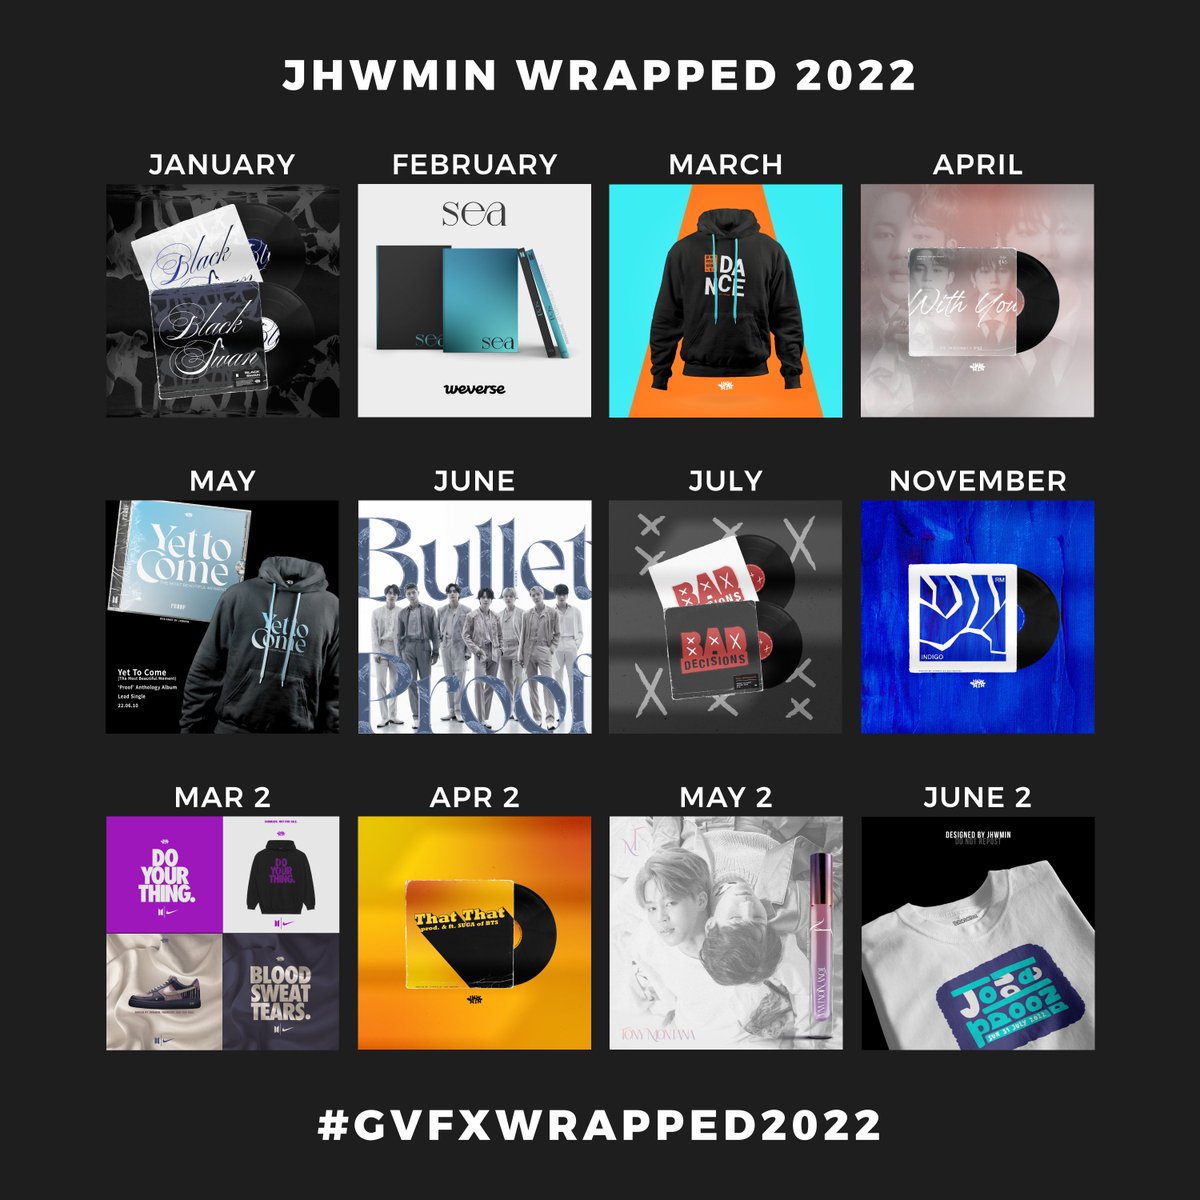 jhwmin wrapped 2022 

ok bye

#gvfxwrapped2022 #artvsartist2022